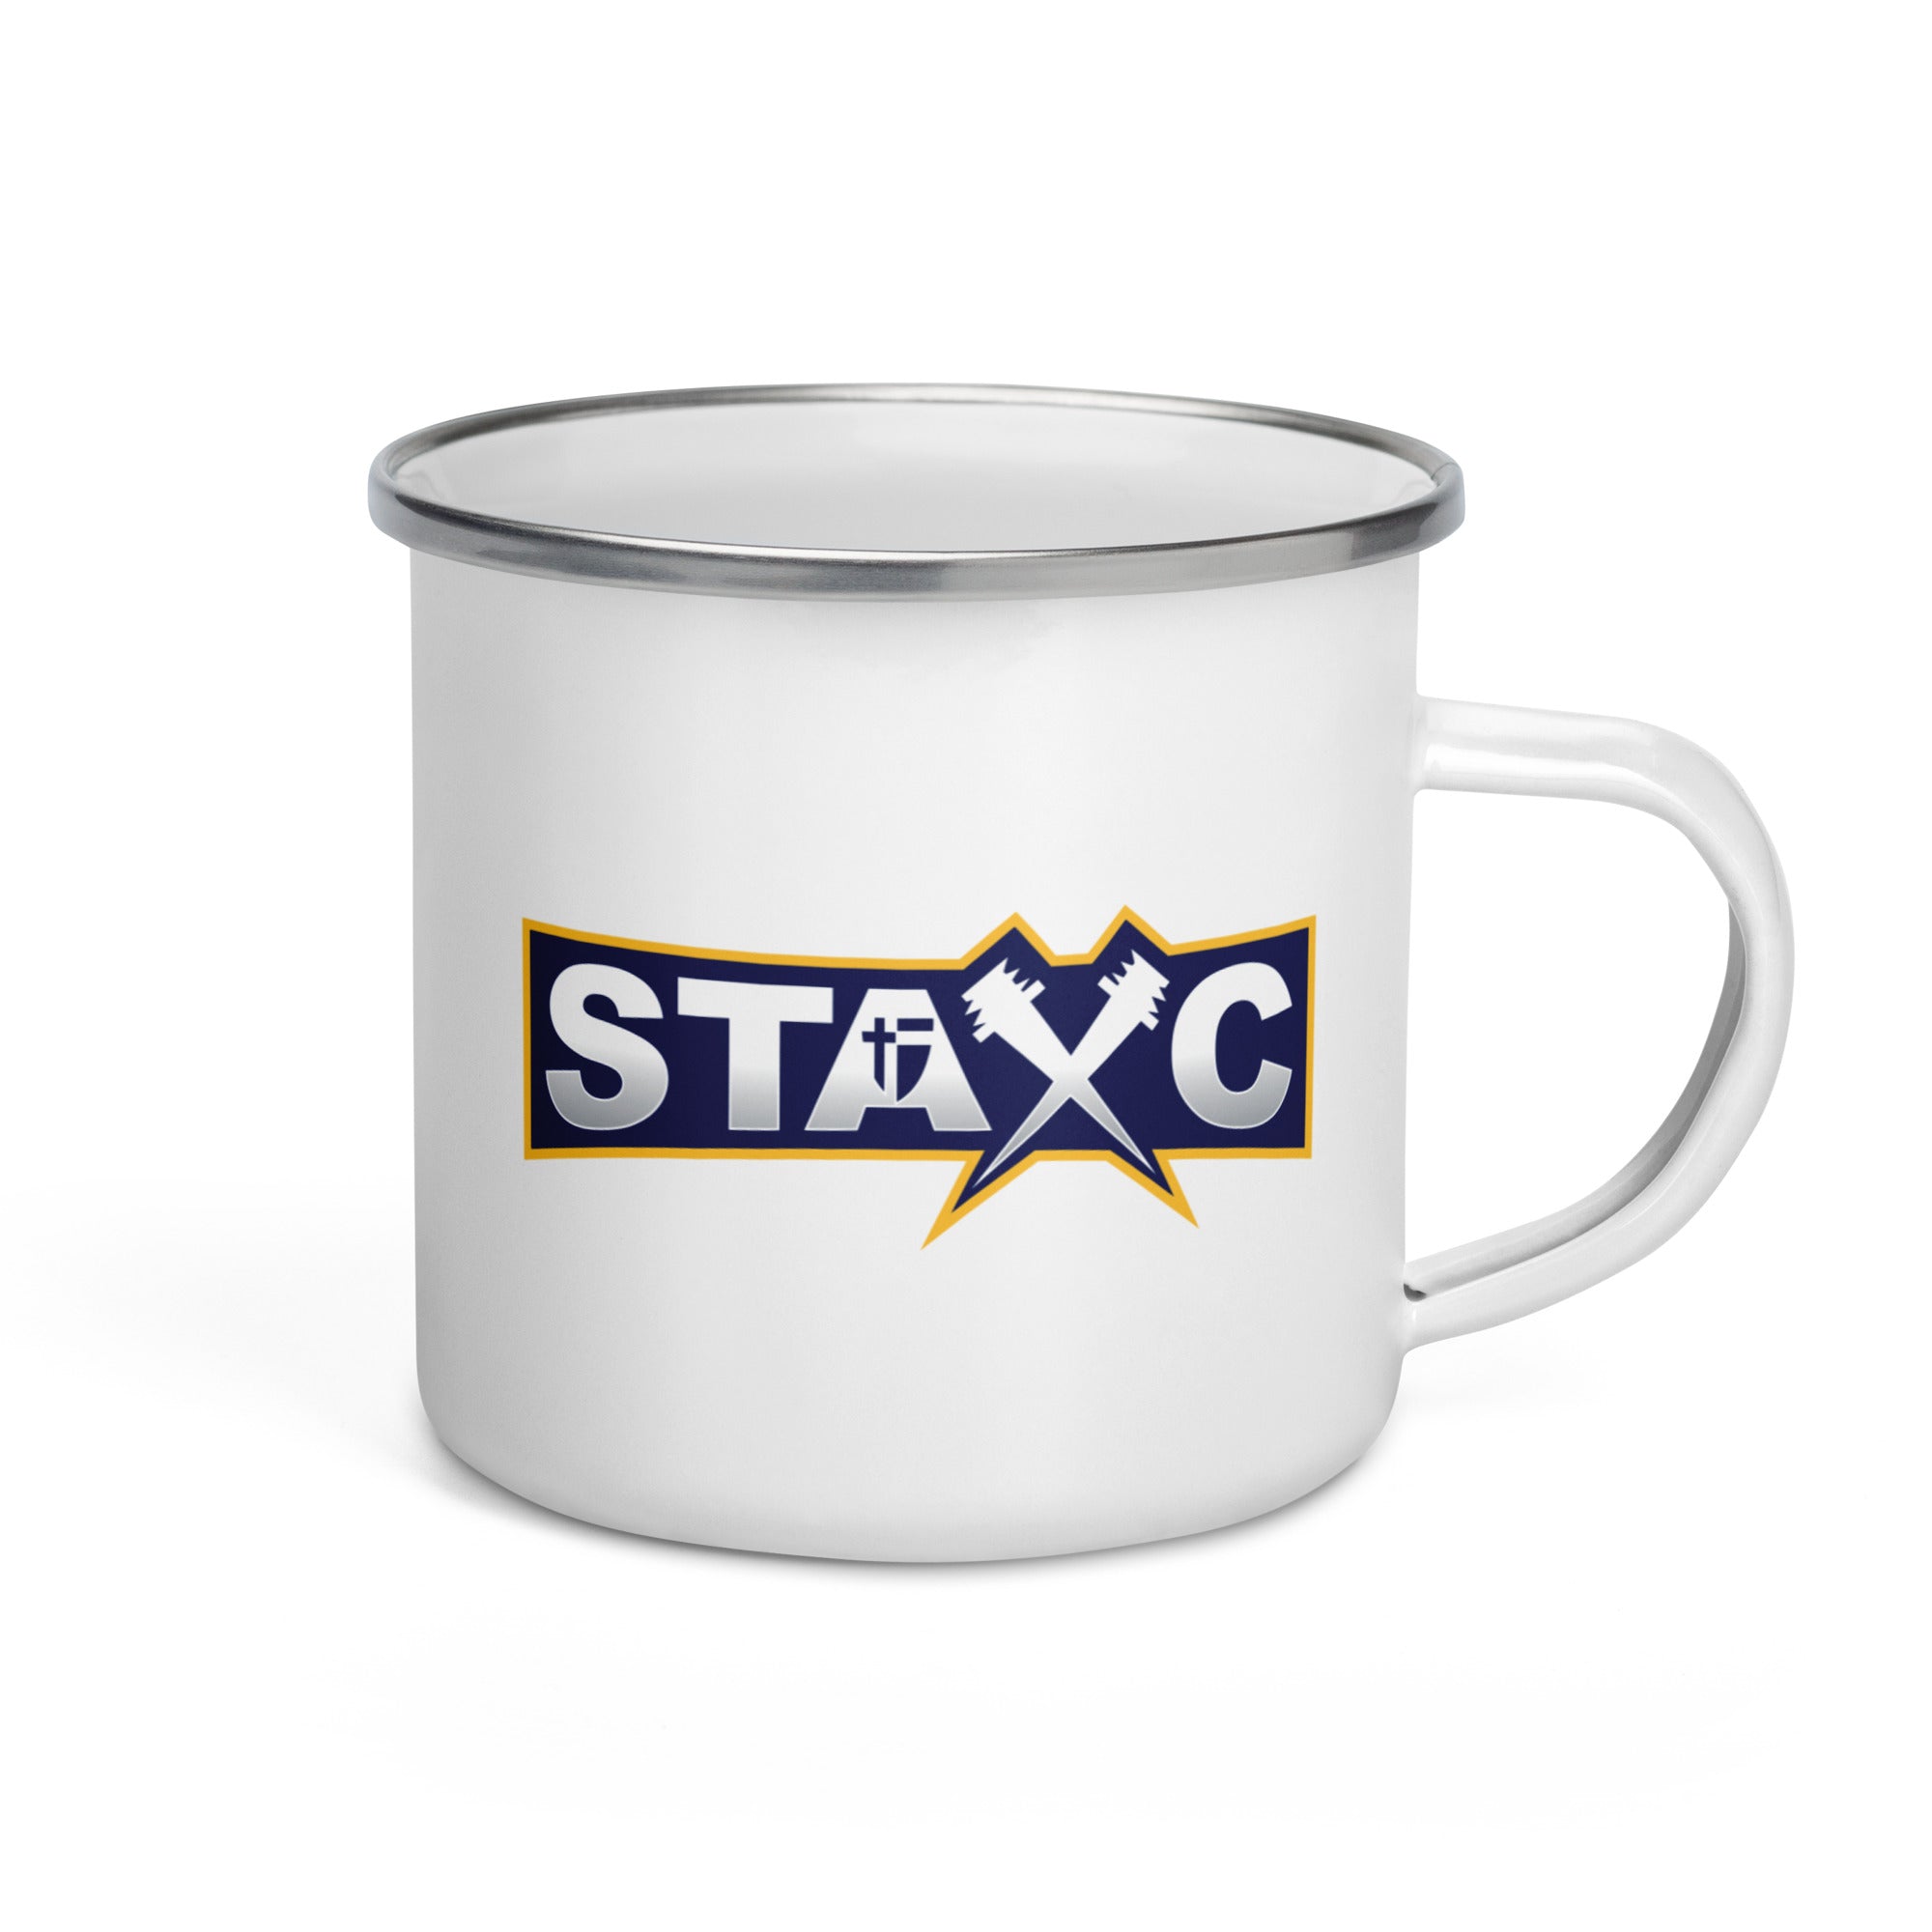 STAXC Enamel Mug